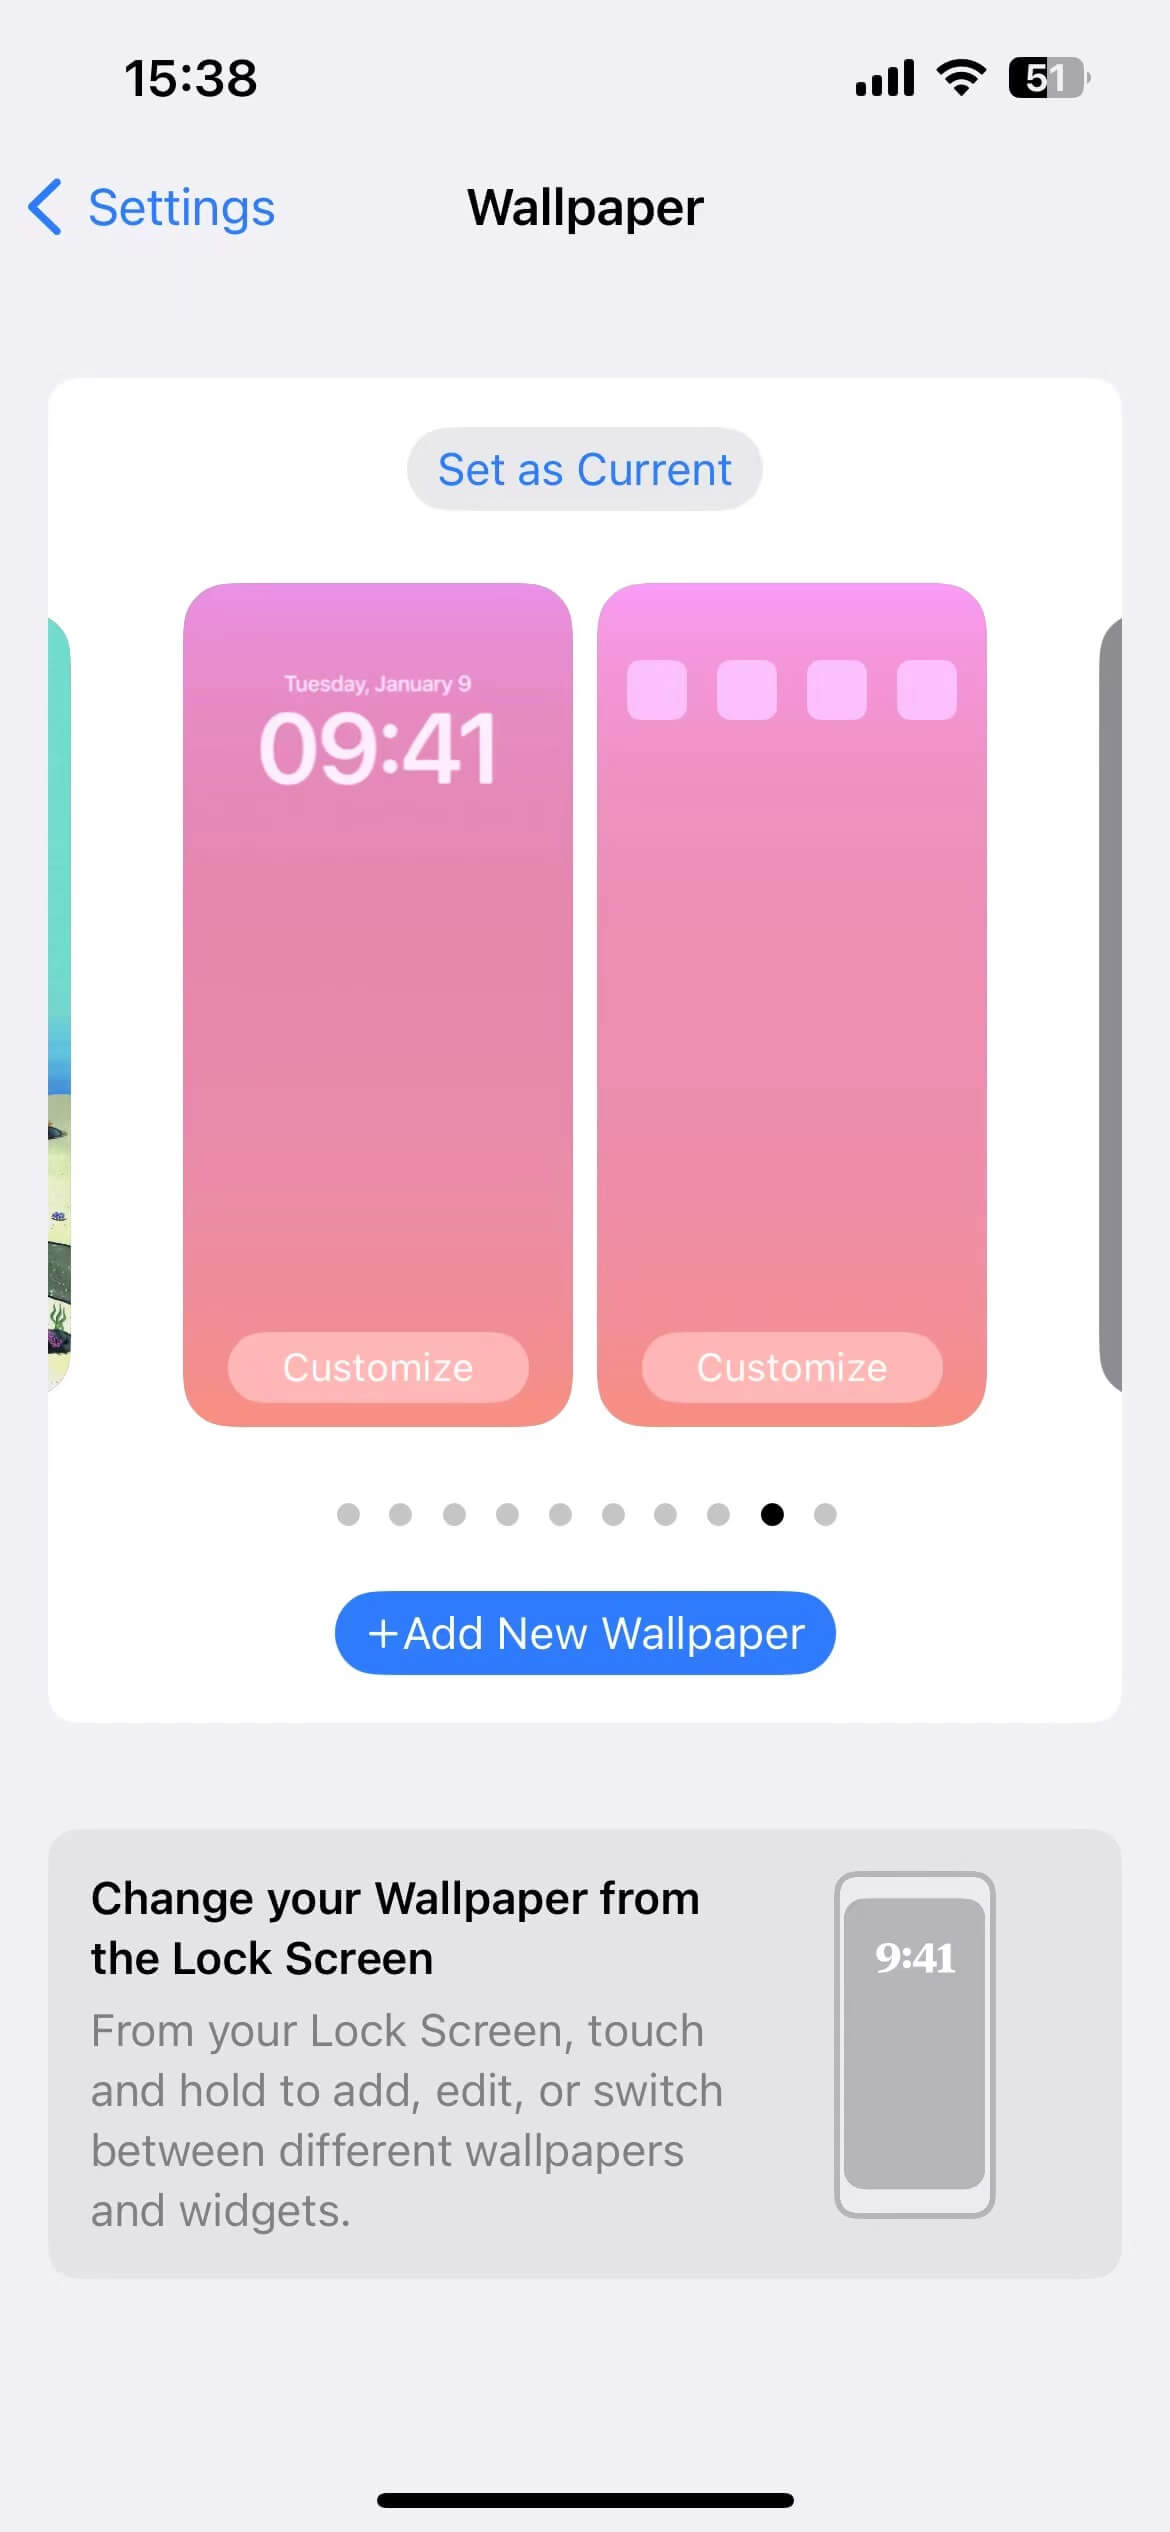 iPhone wallpaper settings interface